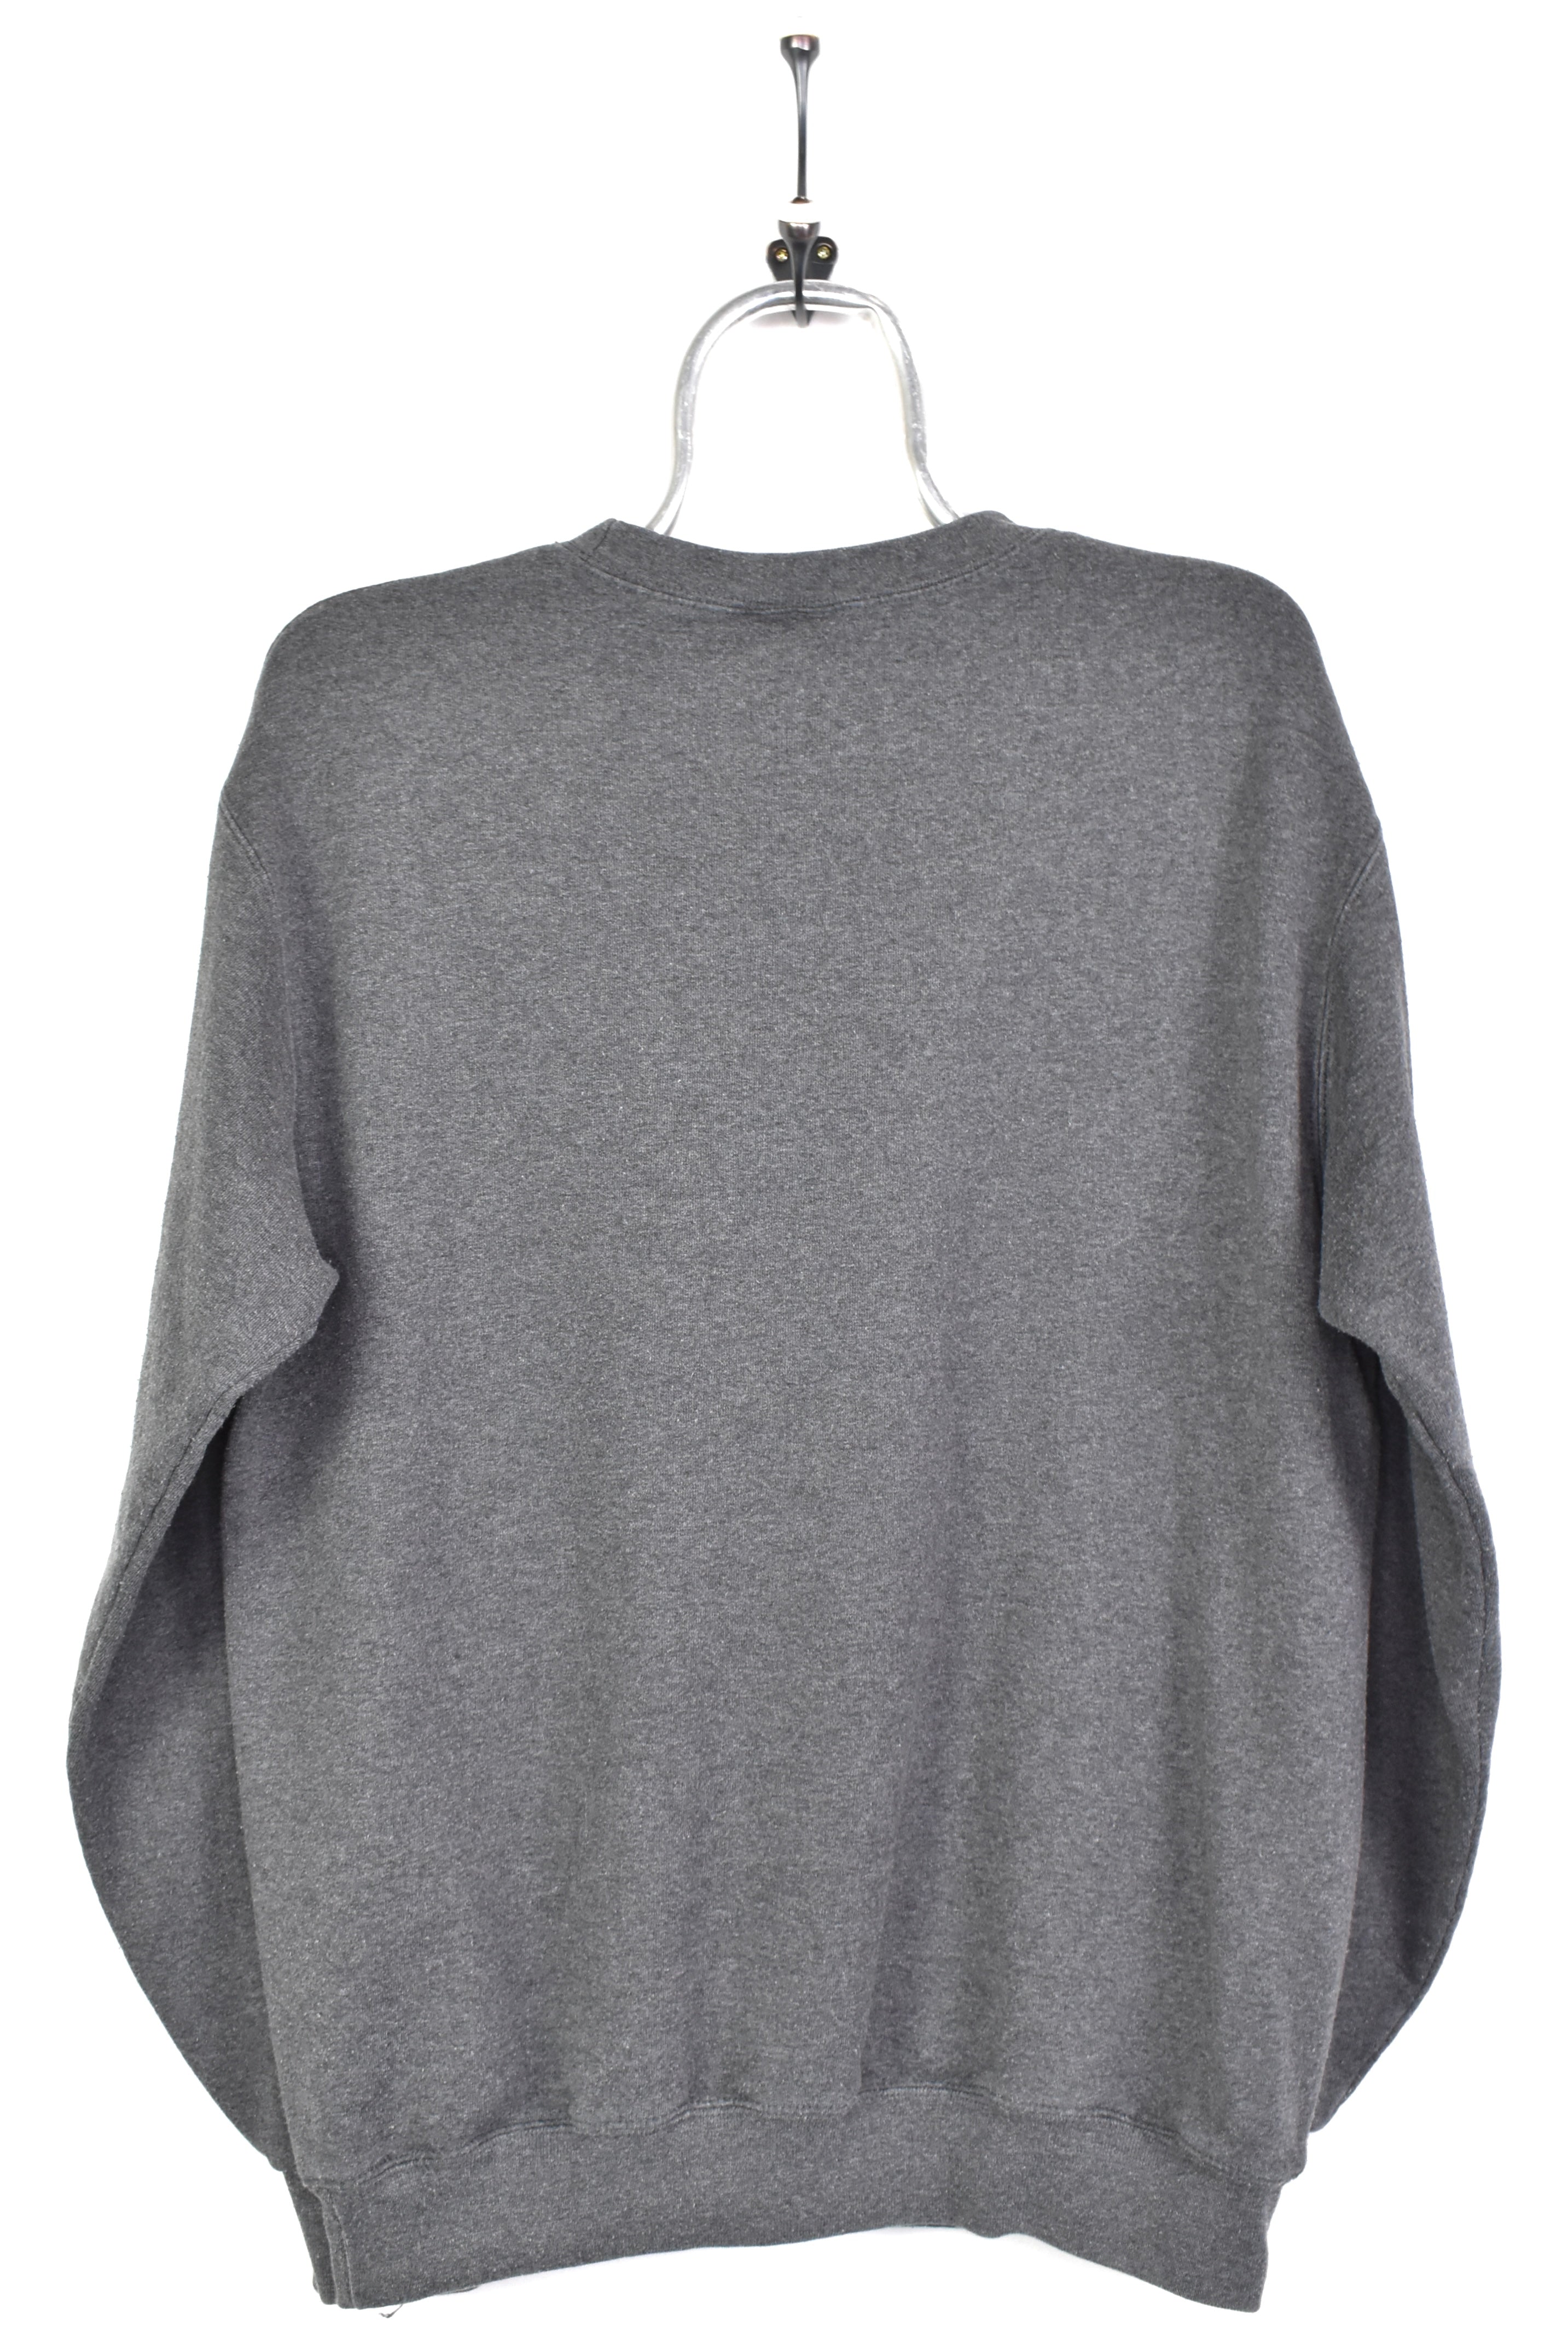 Vintage miami university grey sweatshirt | medium COLLEGE